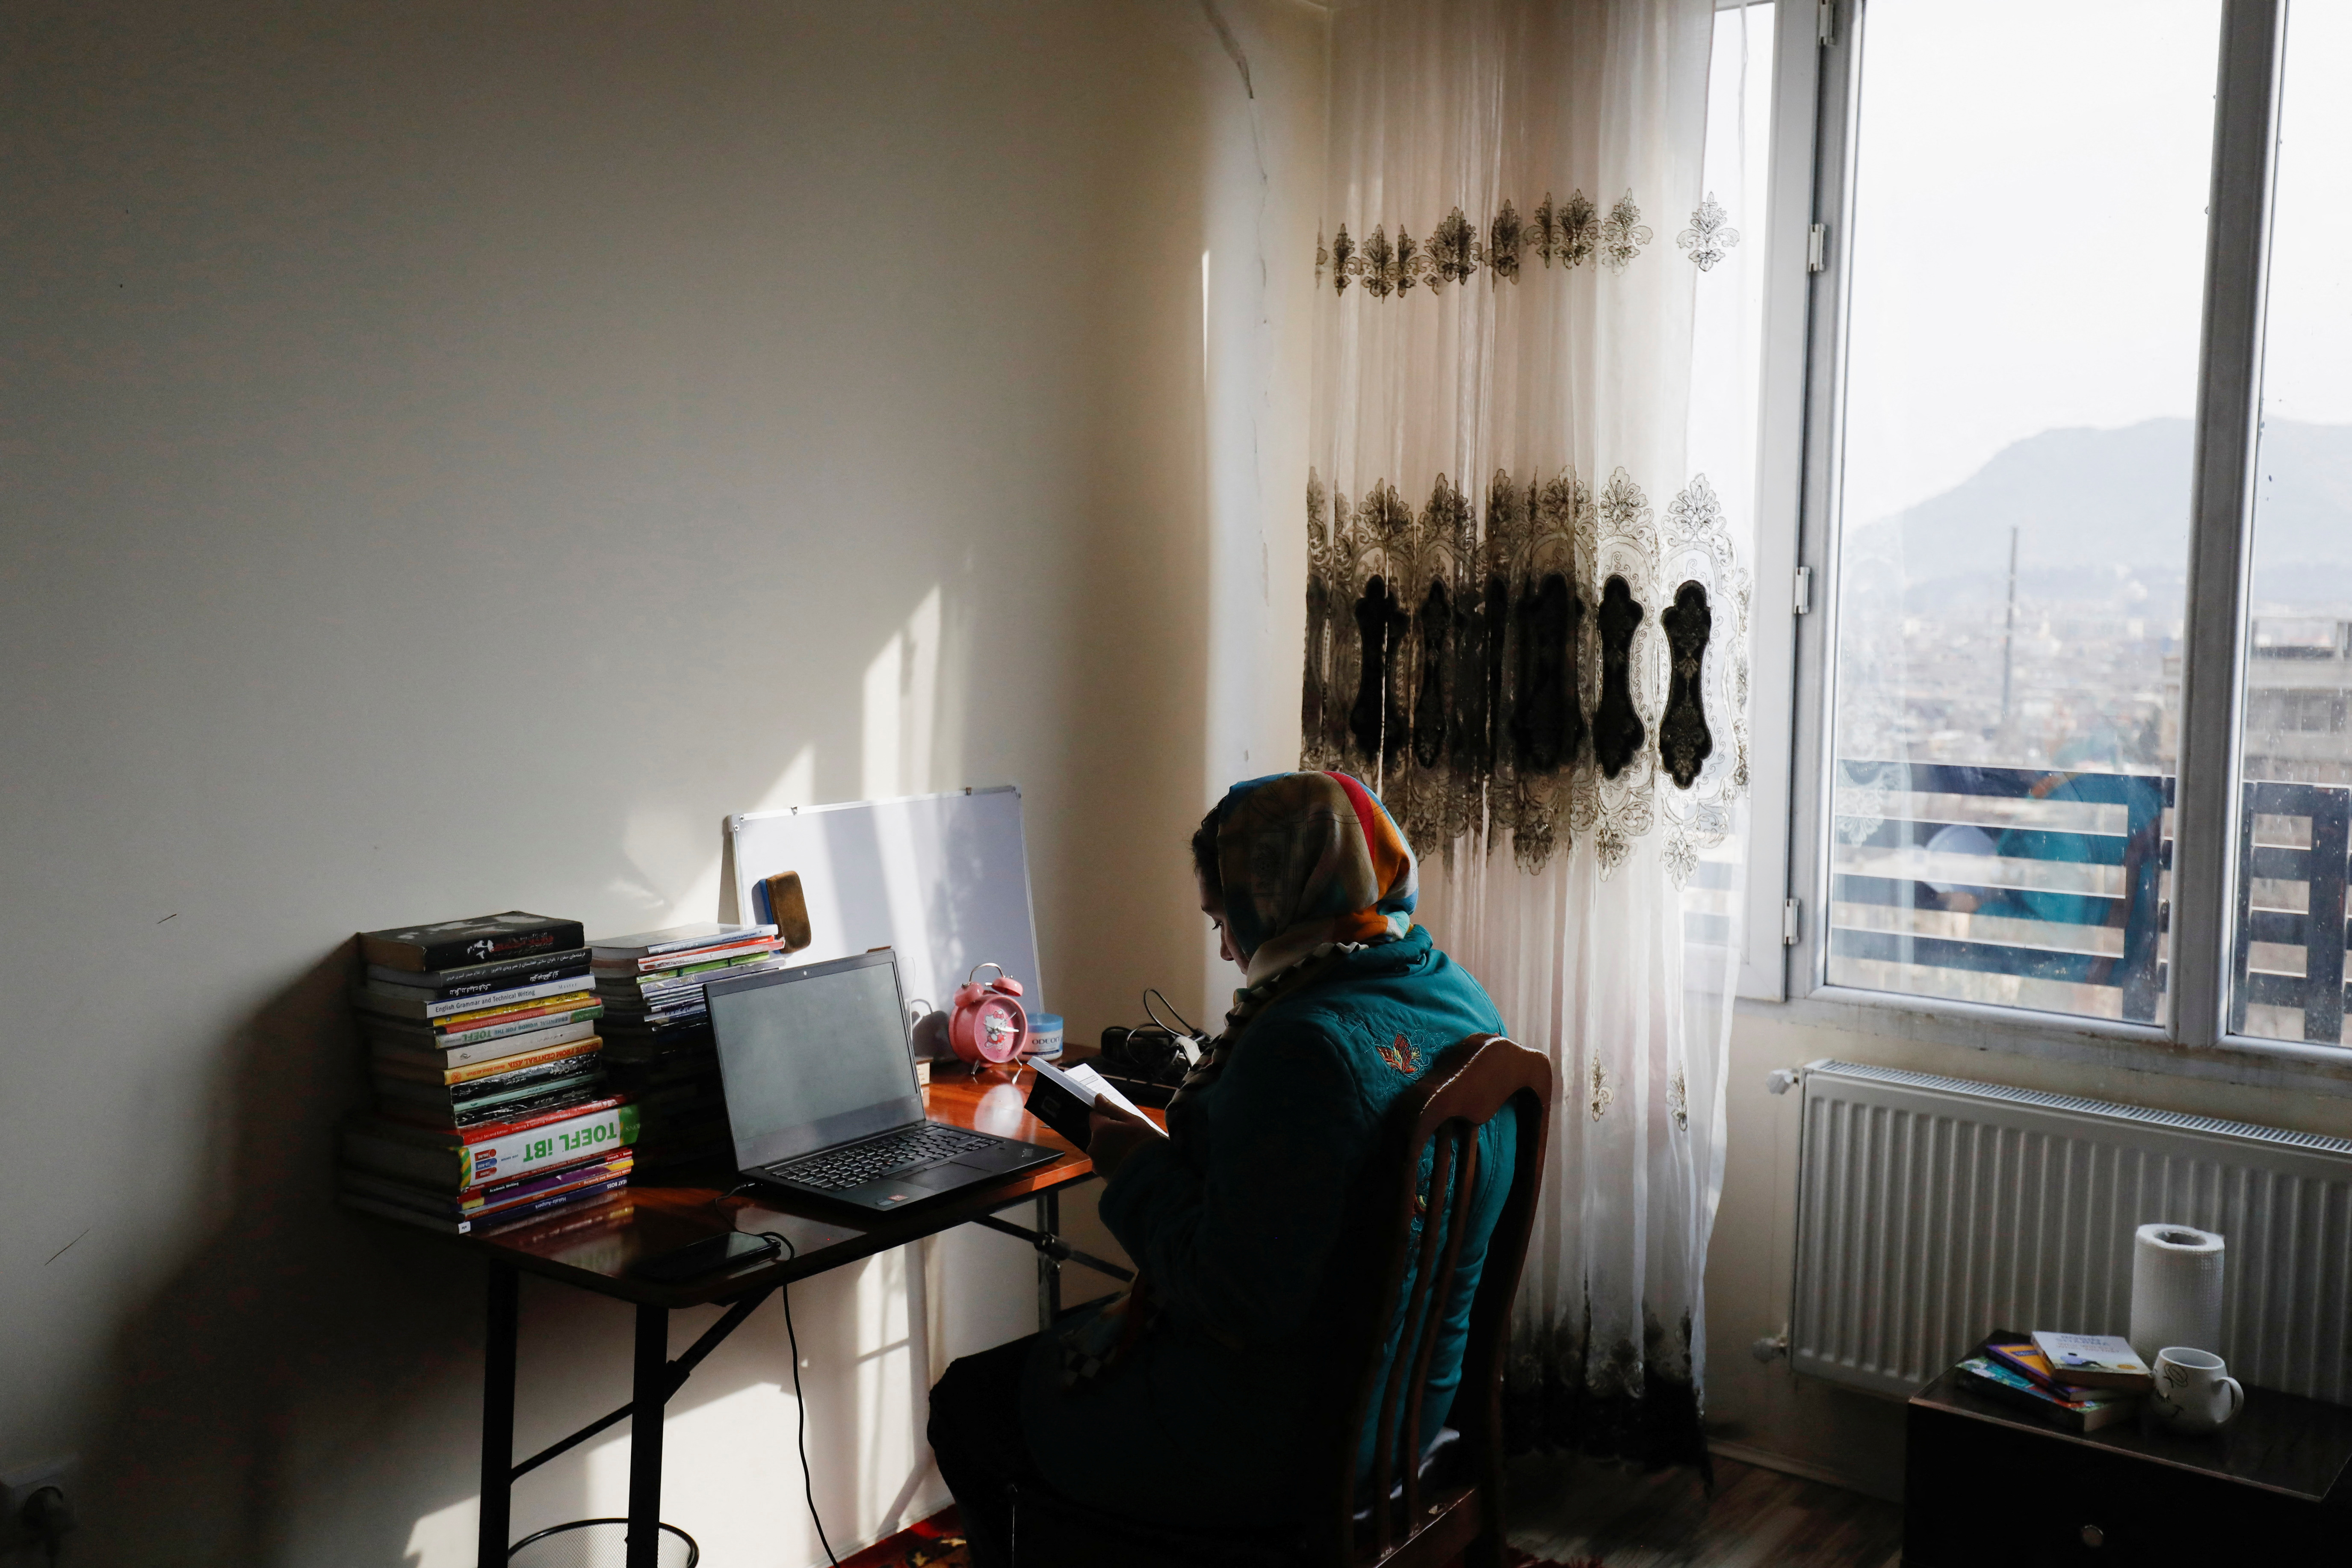 Sana, an Afghan teacher, reads a book before starting an online class, at her house in Kabul